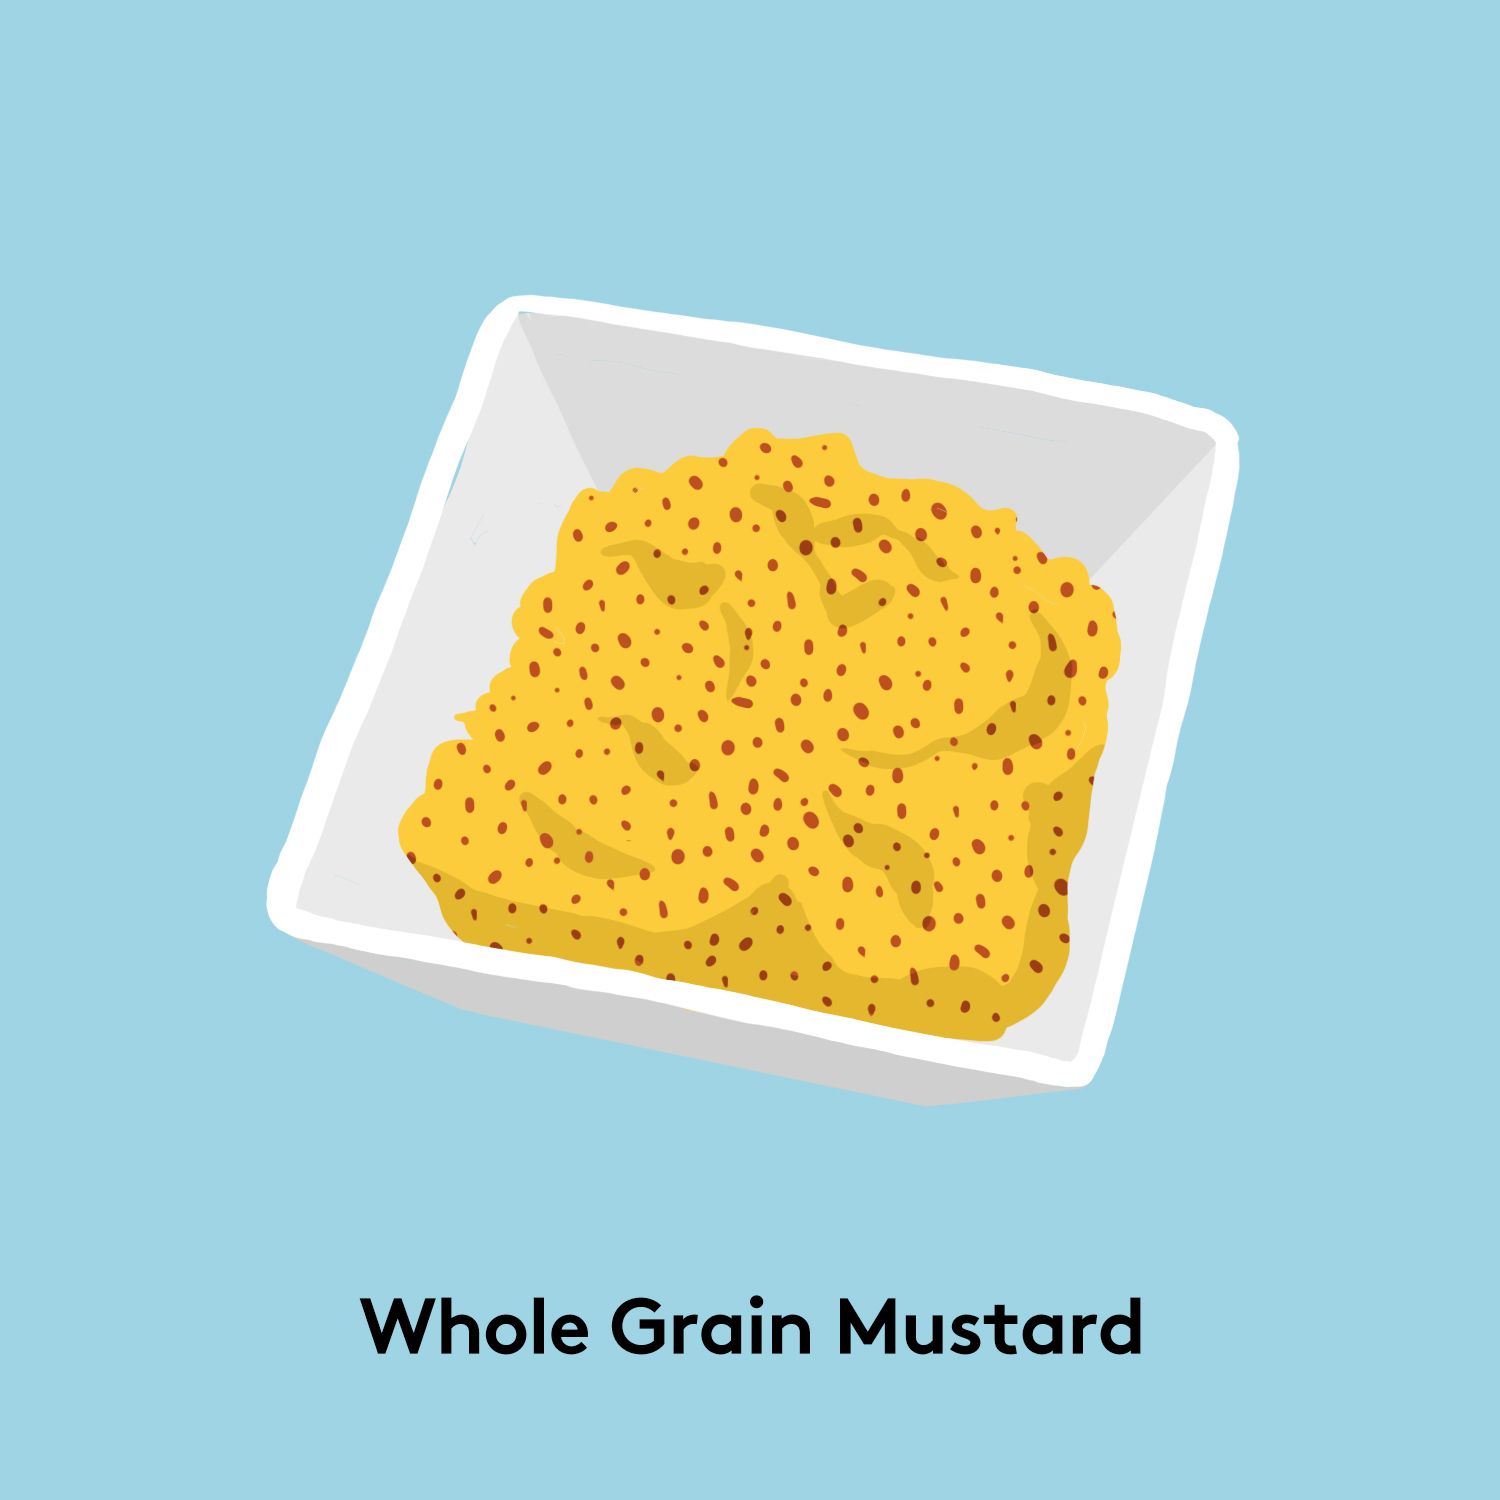 Seòrsan mustard - dealbh mustaird gràin gu lèir